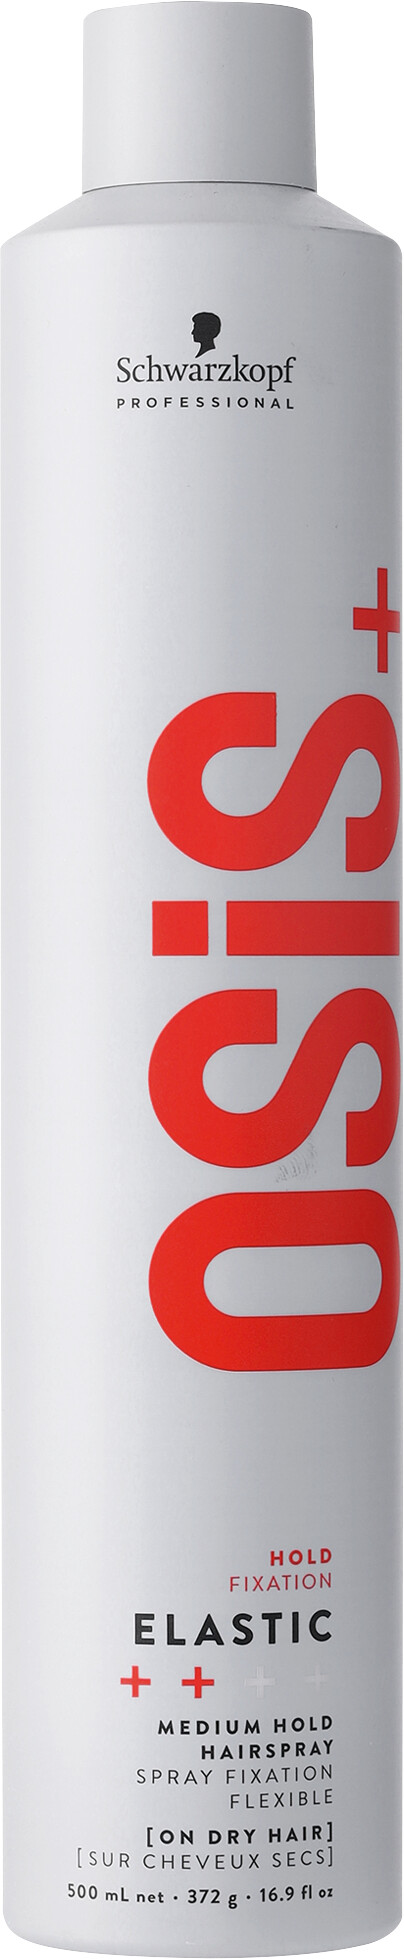 Schwarzkopf Professional Osis+ Elastic Medium Hold Hairspray 500ml